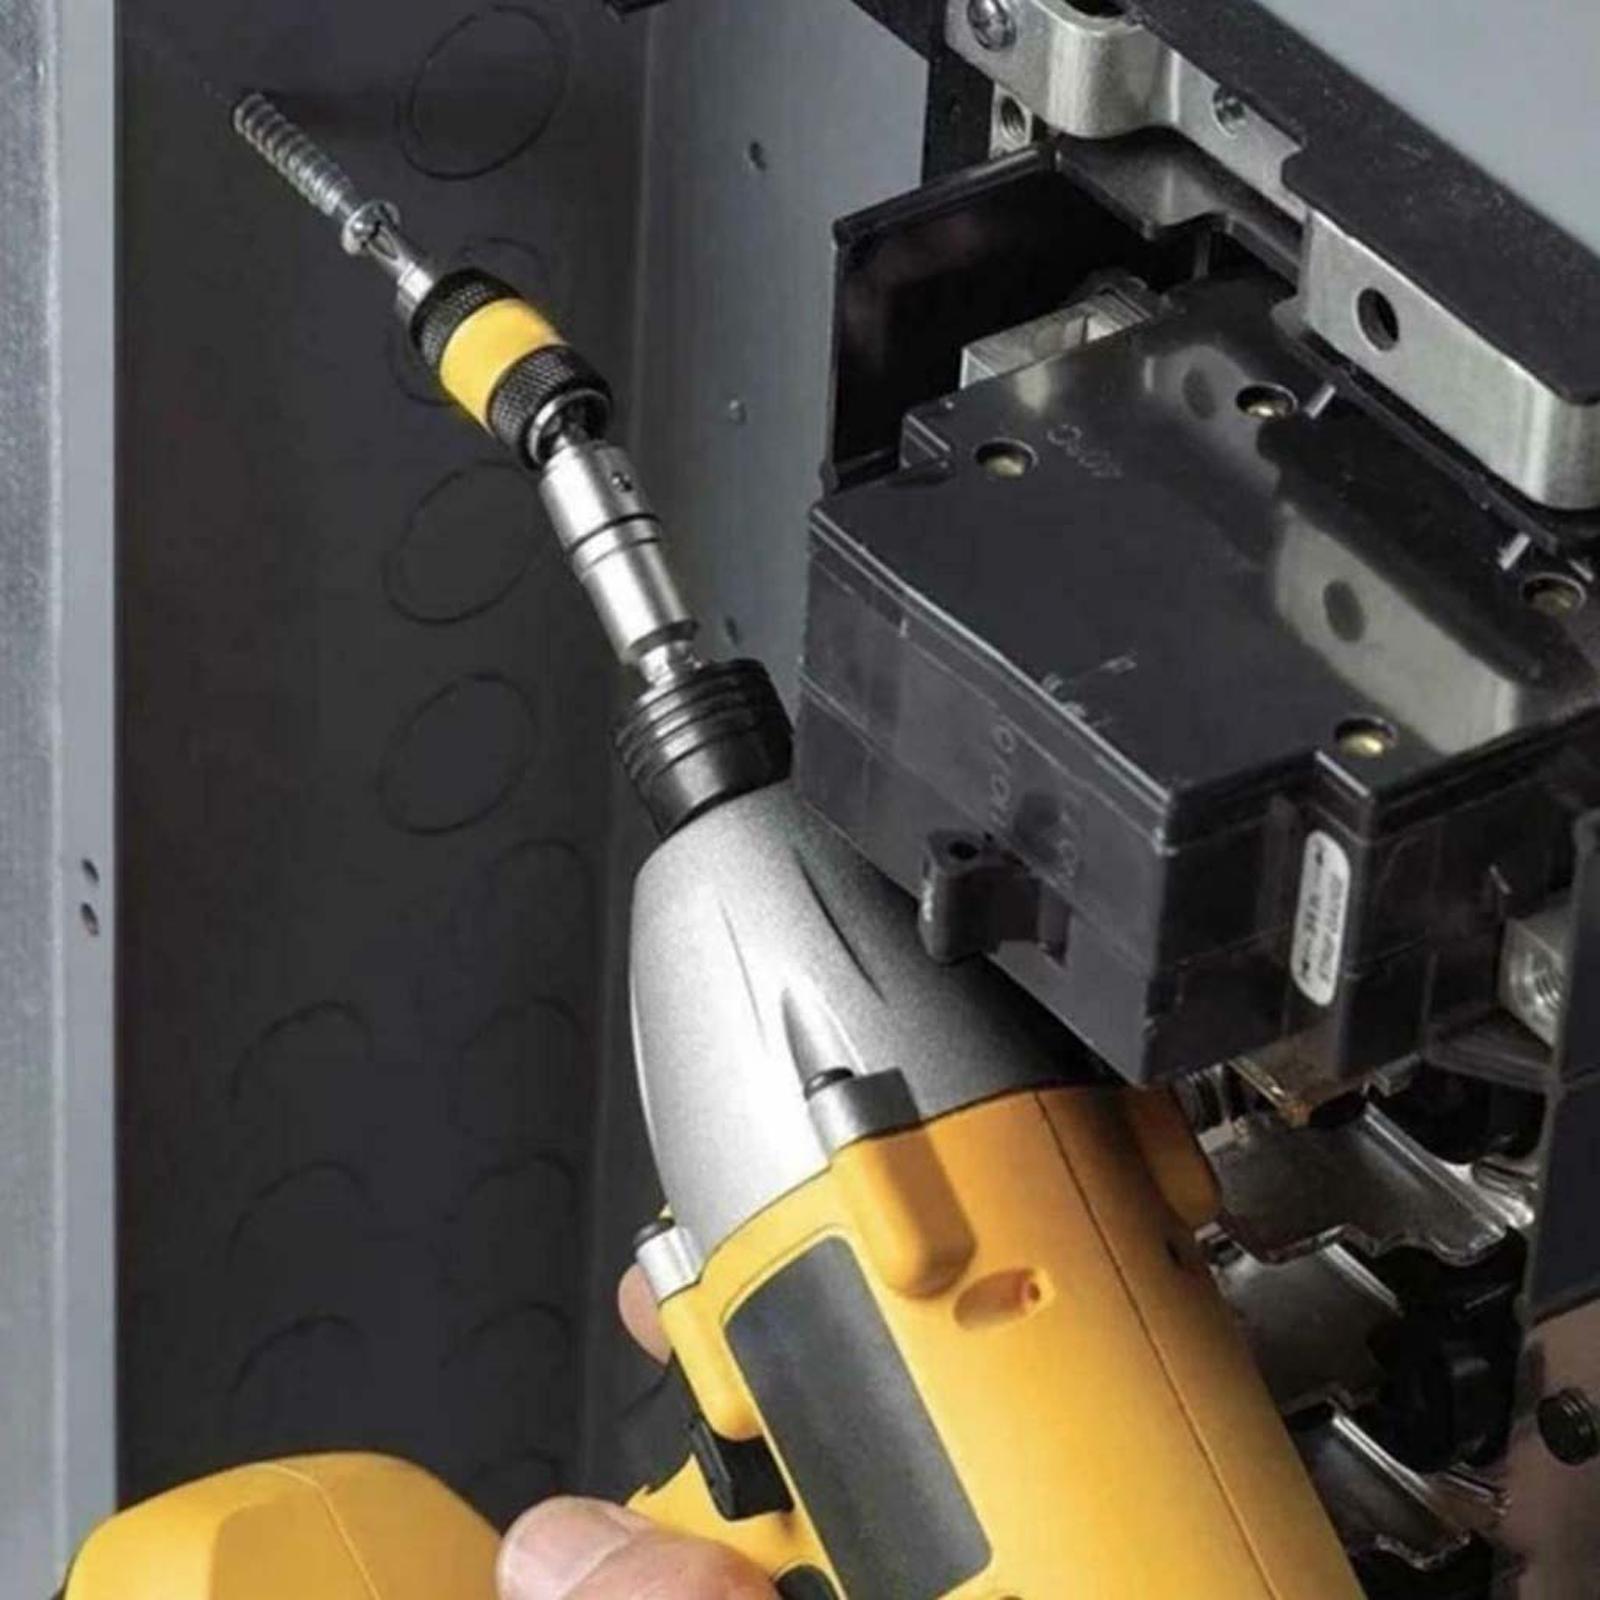 Magnetic Pivoting Bit Tip Swivel Screw Bit Steel Accessory Drill Holders Black Red